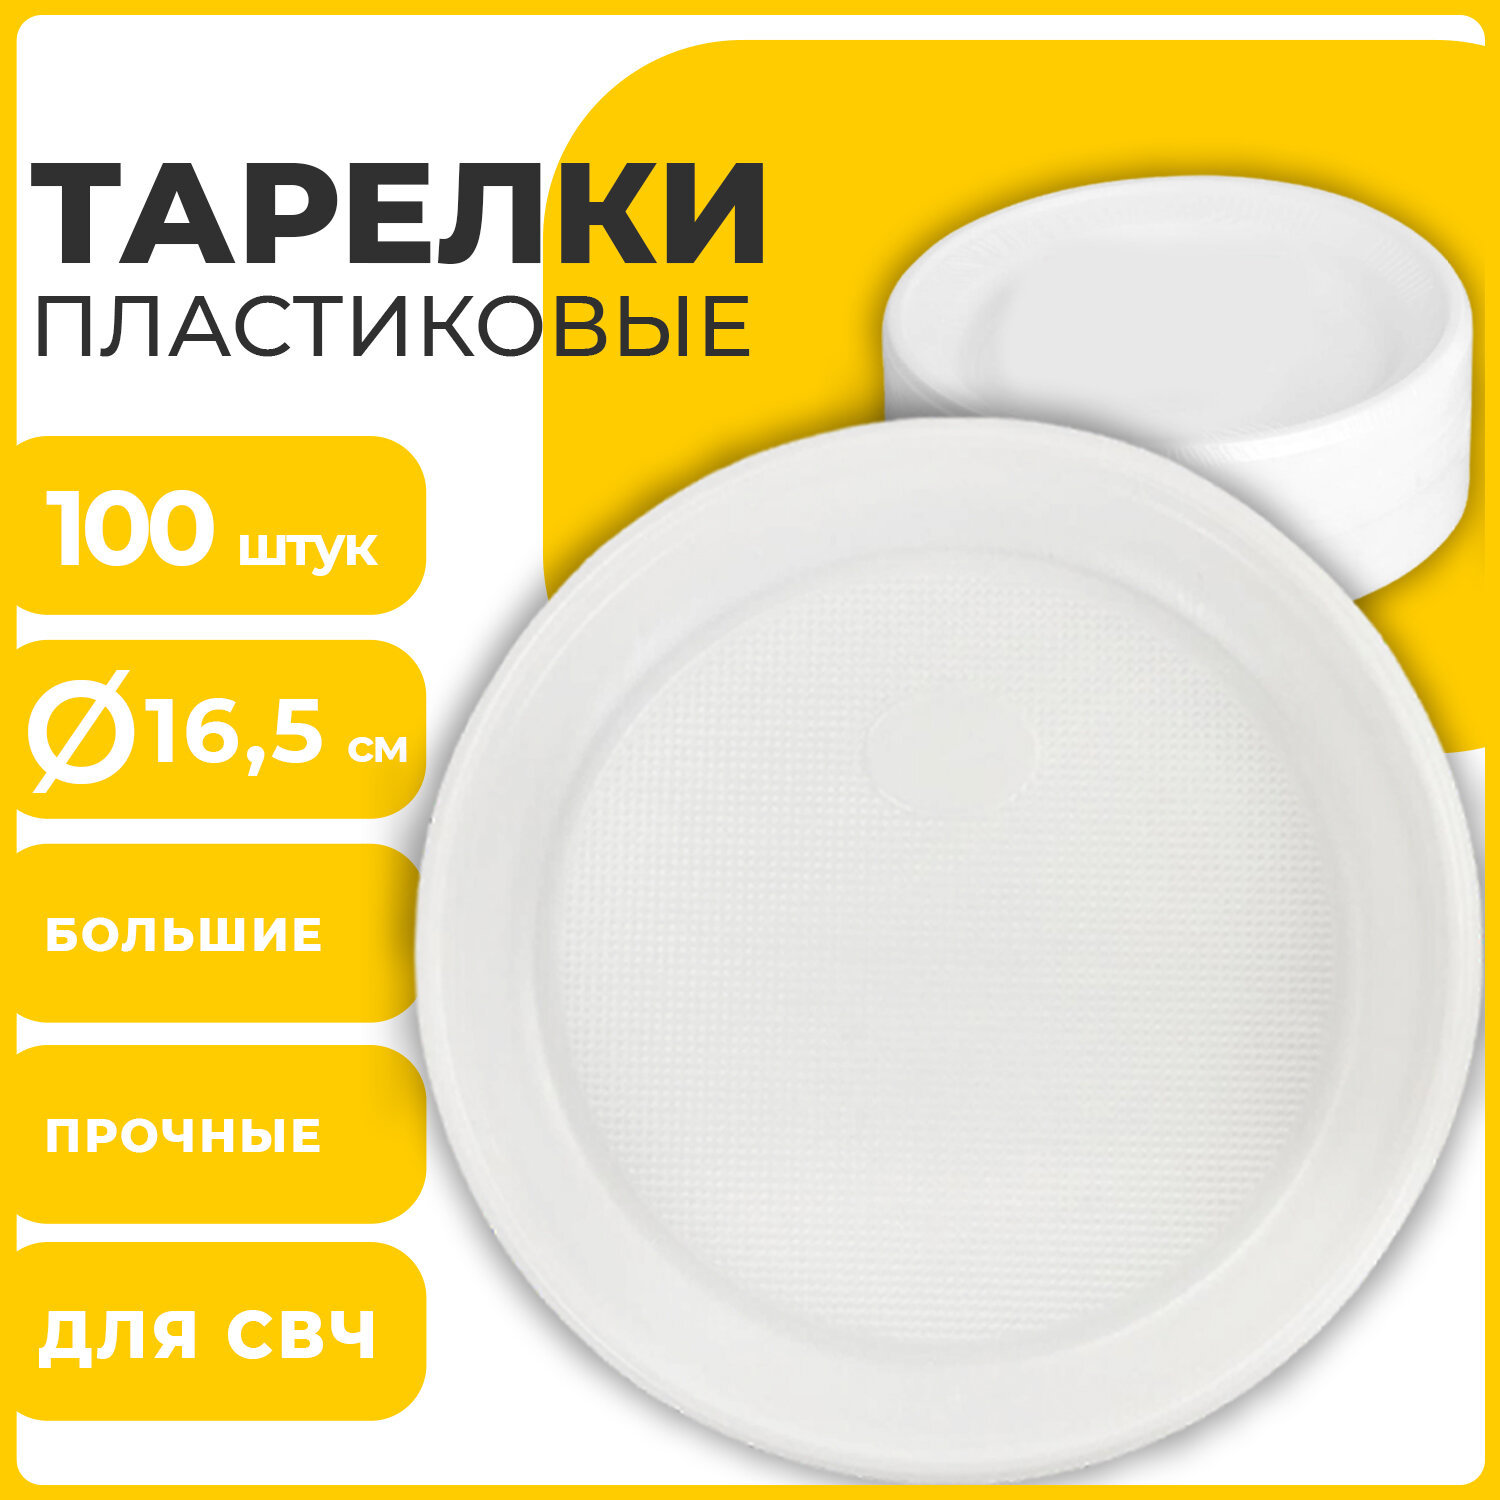 91071657 Одноразовые пластиковые тарелки 607388 белый Стандарт STLM-0468684 LAIMA